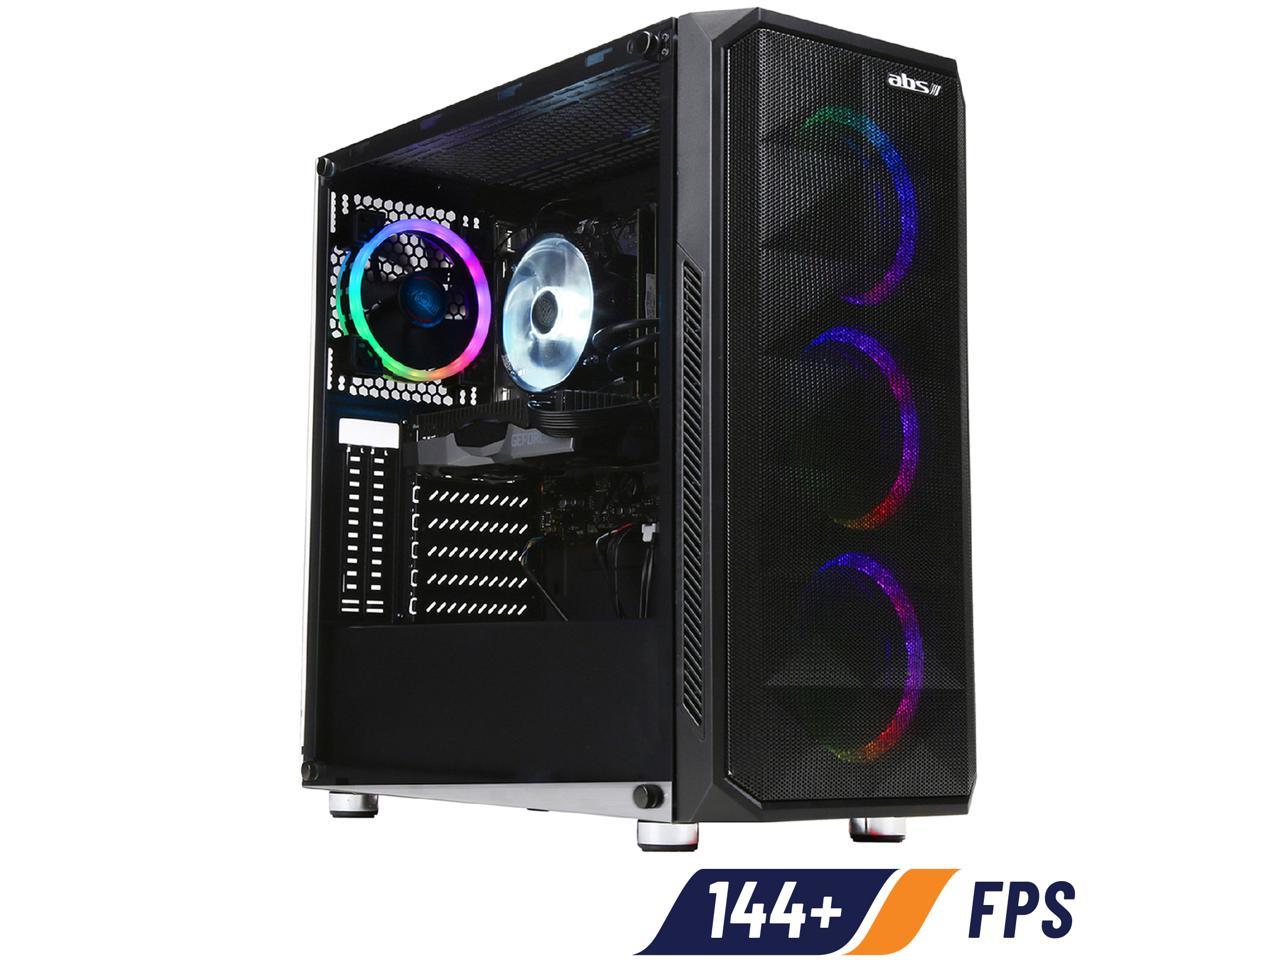 ABS Mage M - Ryzen 7 3700X - GeForce RTX 2070 Super - 16GB DDR4 - 1TB SSD - Gaming Desktop PC